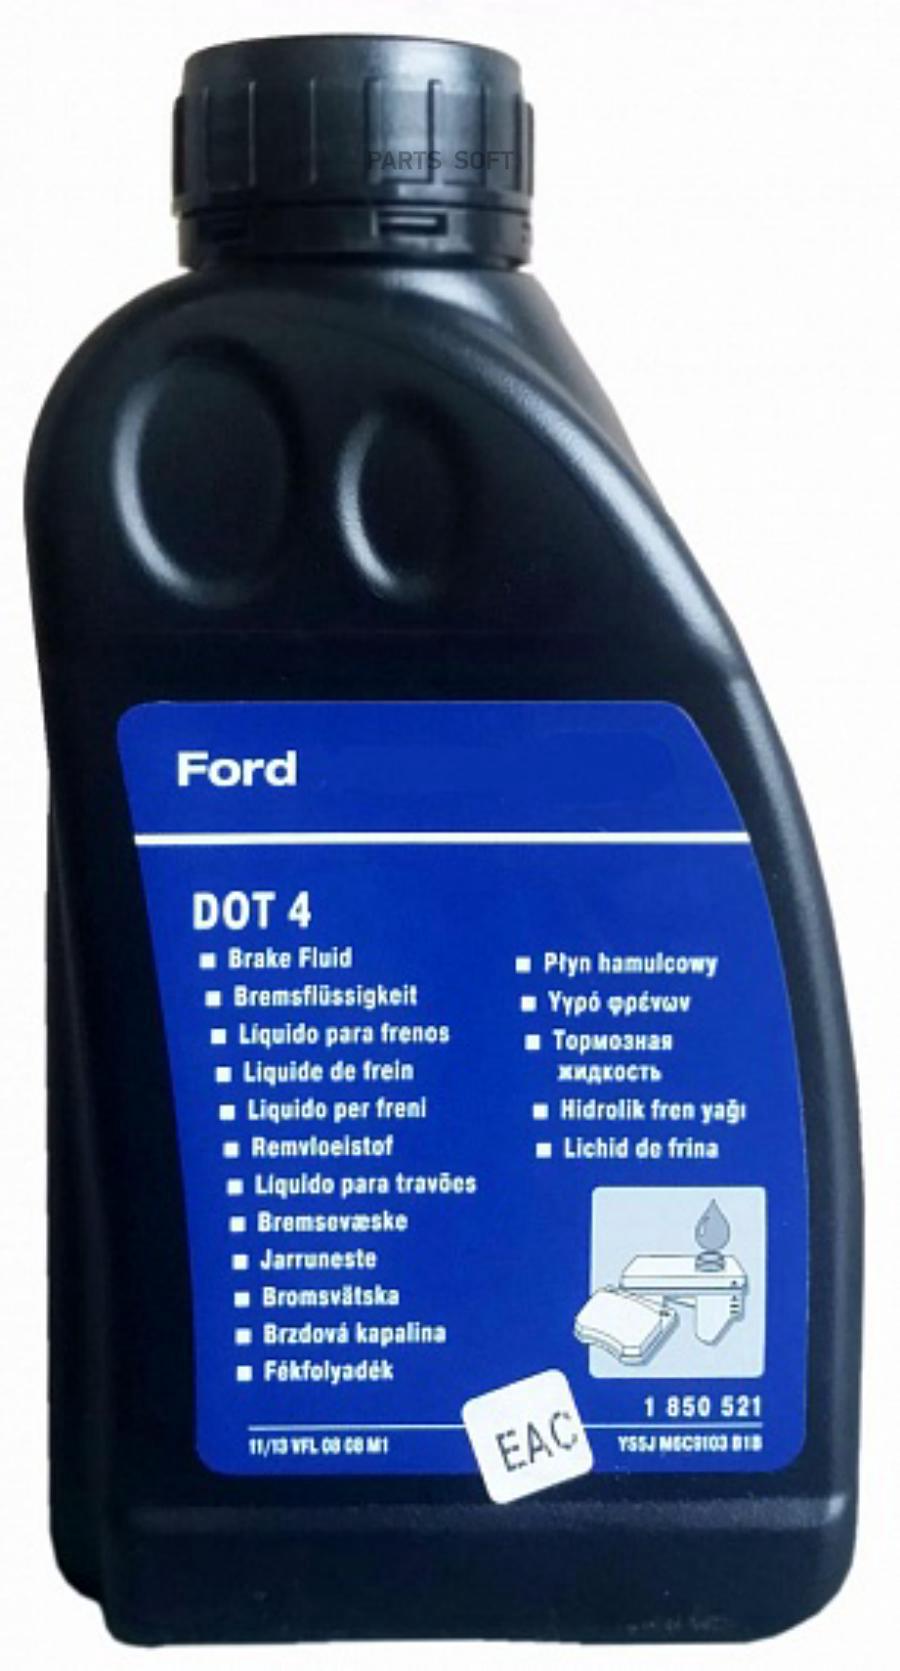 Тормозная жидкость Ford DOT-4 0.5л 1850521